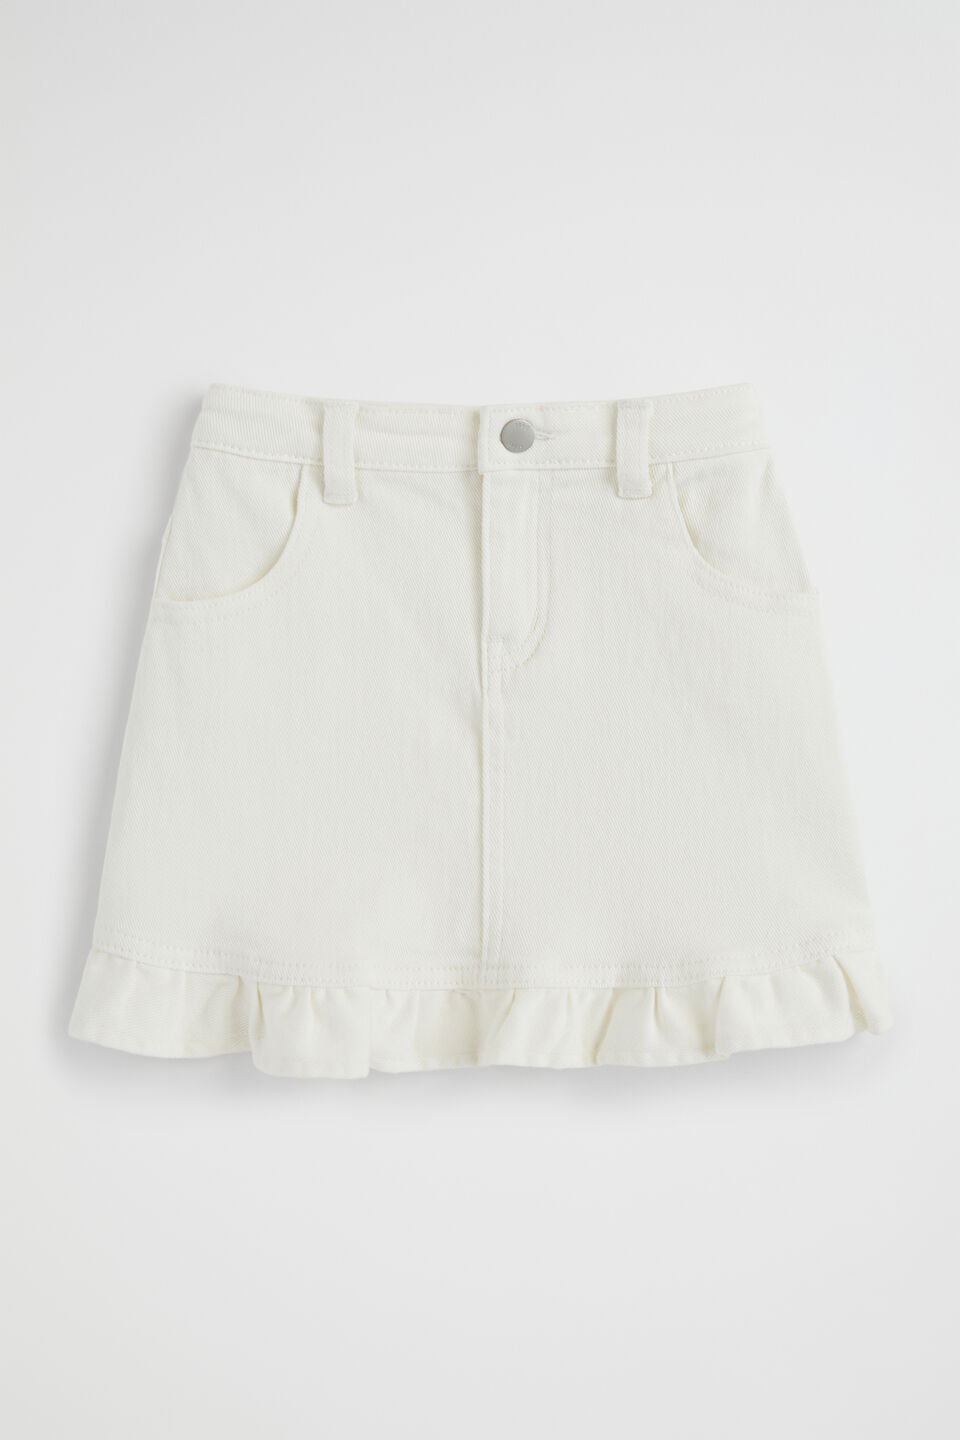 Denim Frill Skirt  Vintage White Wash